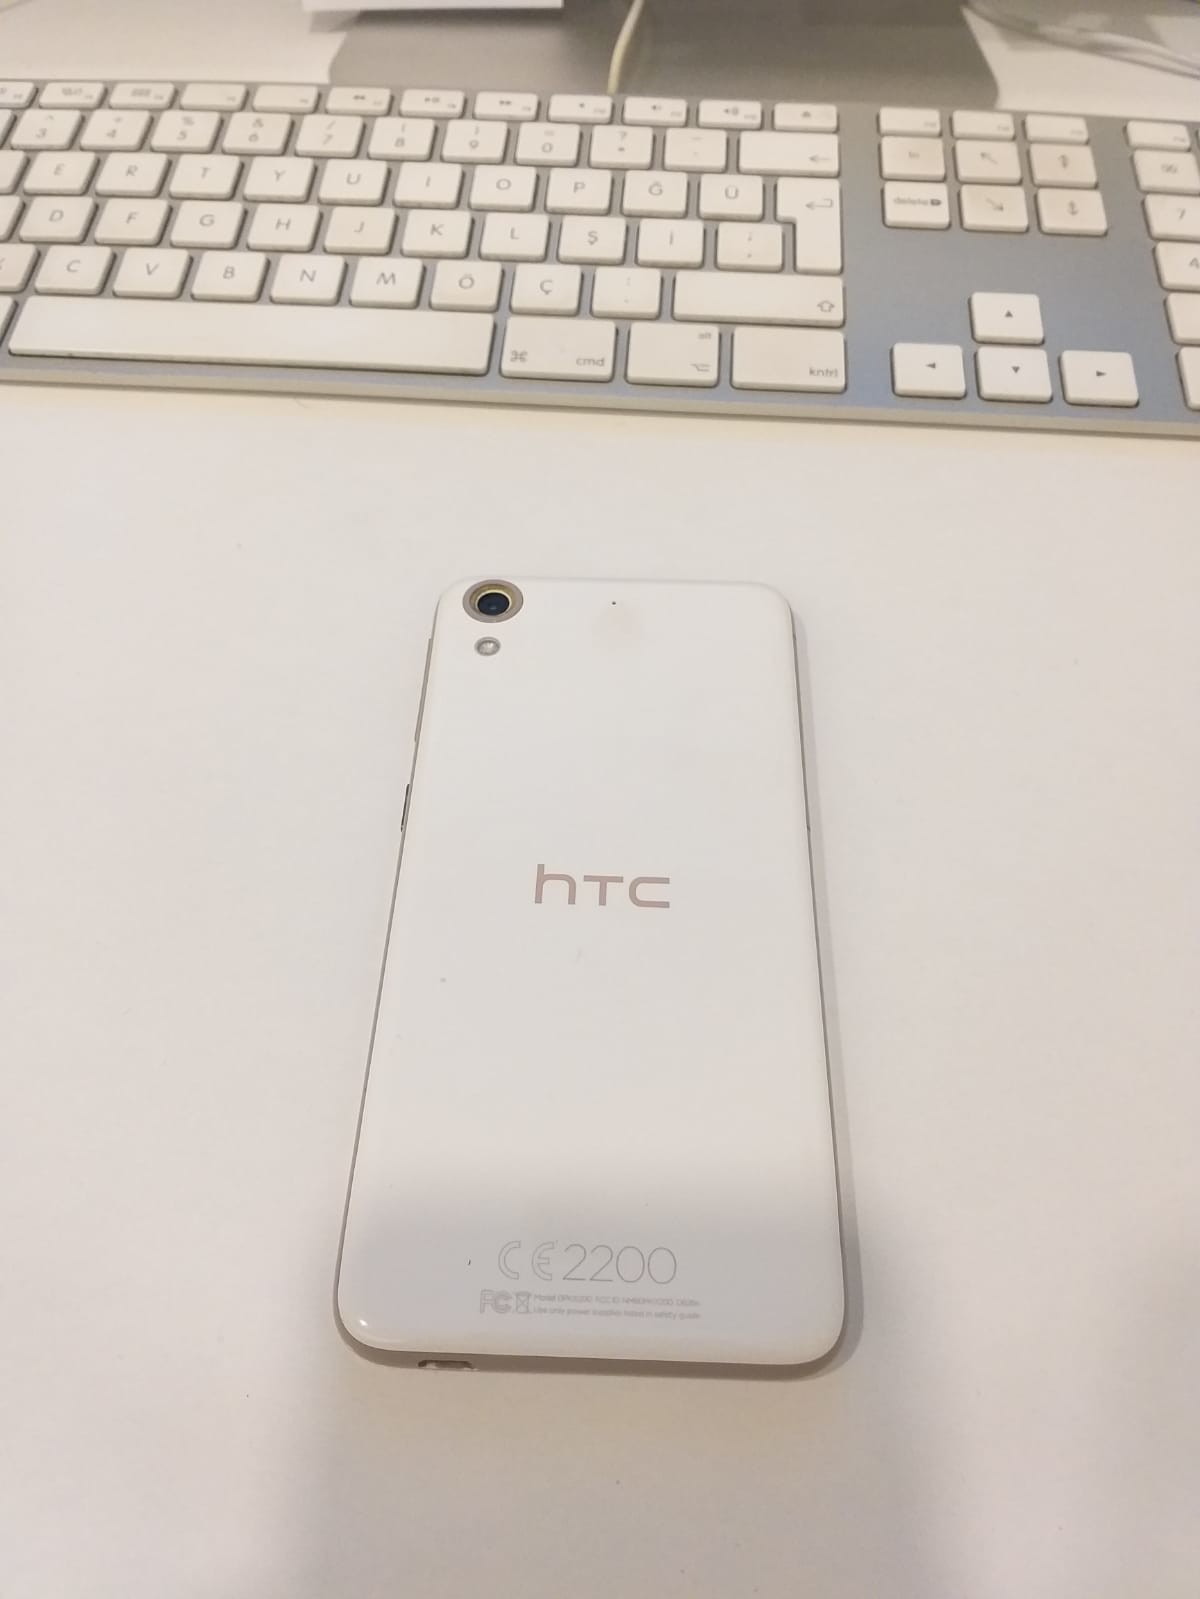 HTC Desire 626 Android Snapdragon 410, Adreno 310 gpu, 2GB Ram,16 gb + SD ===> 400 TL